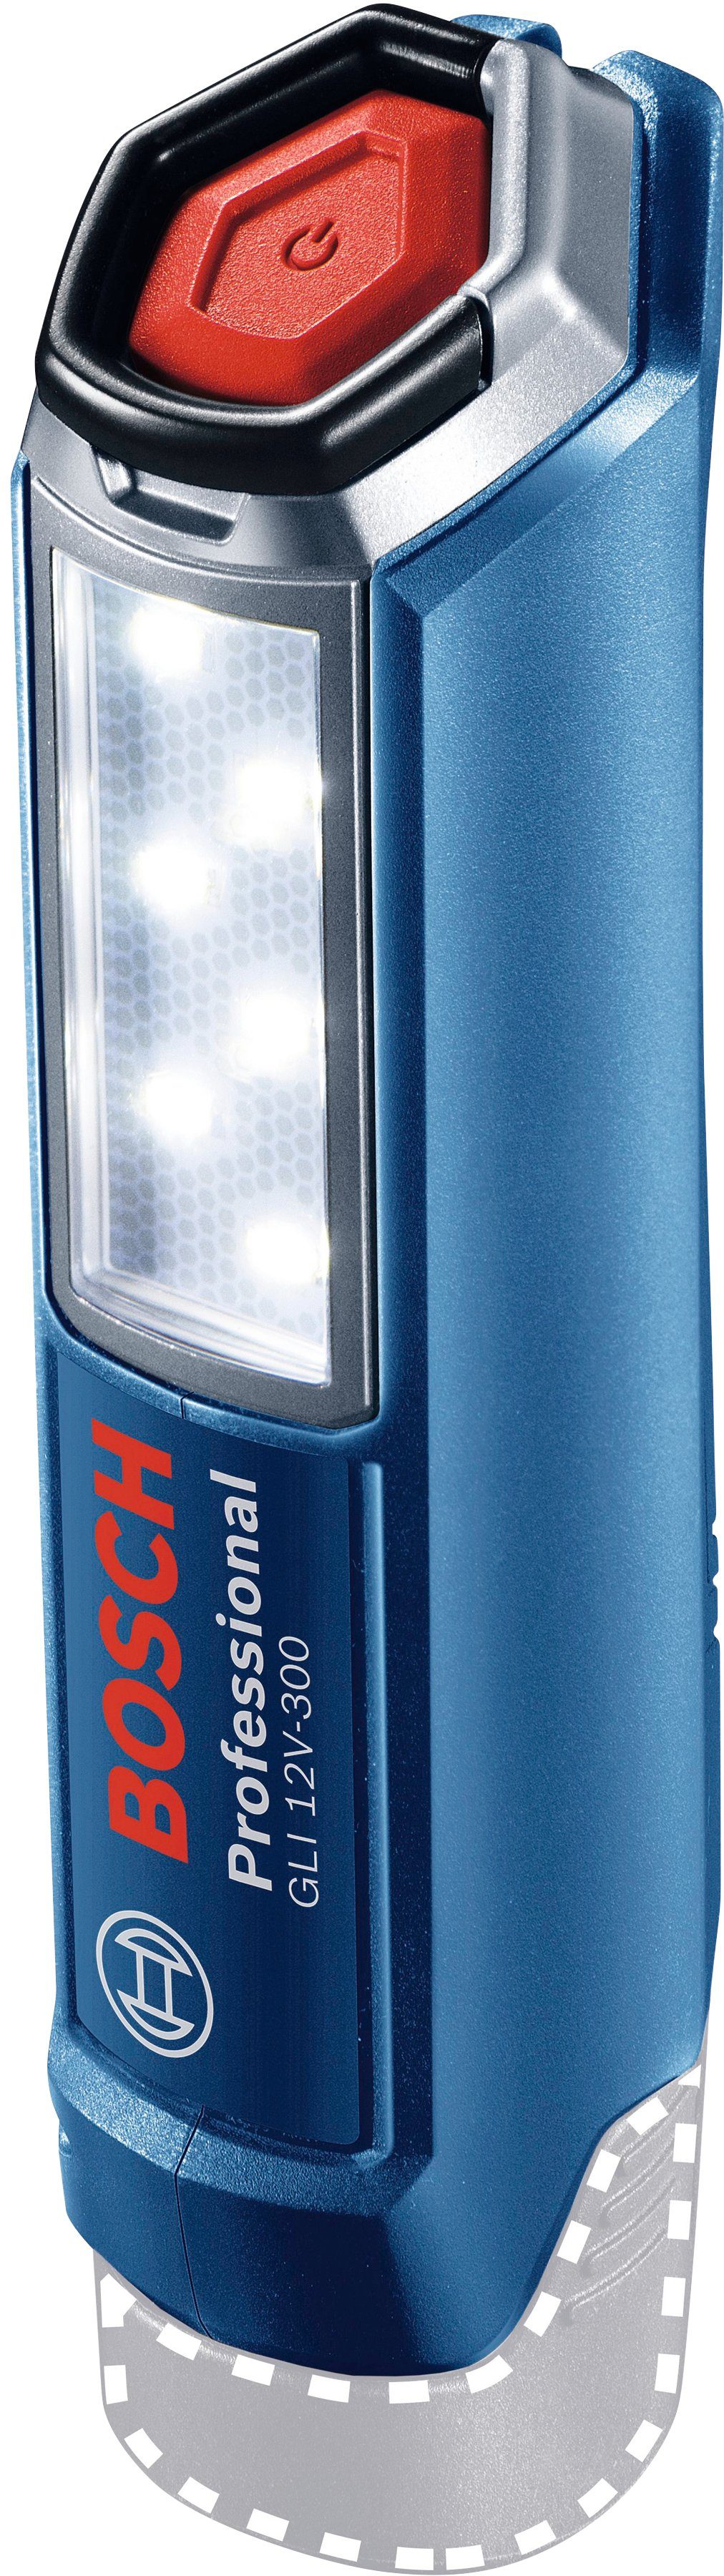 Bosch Professional LED fest ohne lm, V, Arbeitsleuchte 300 integriert, 12 Akku LED GLI 12V-300